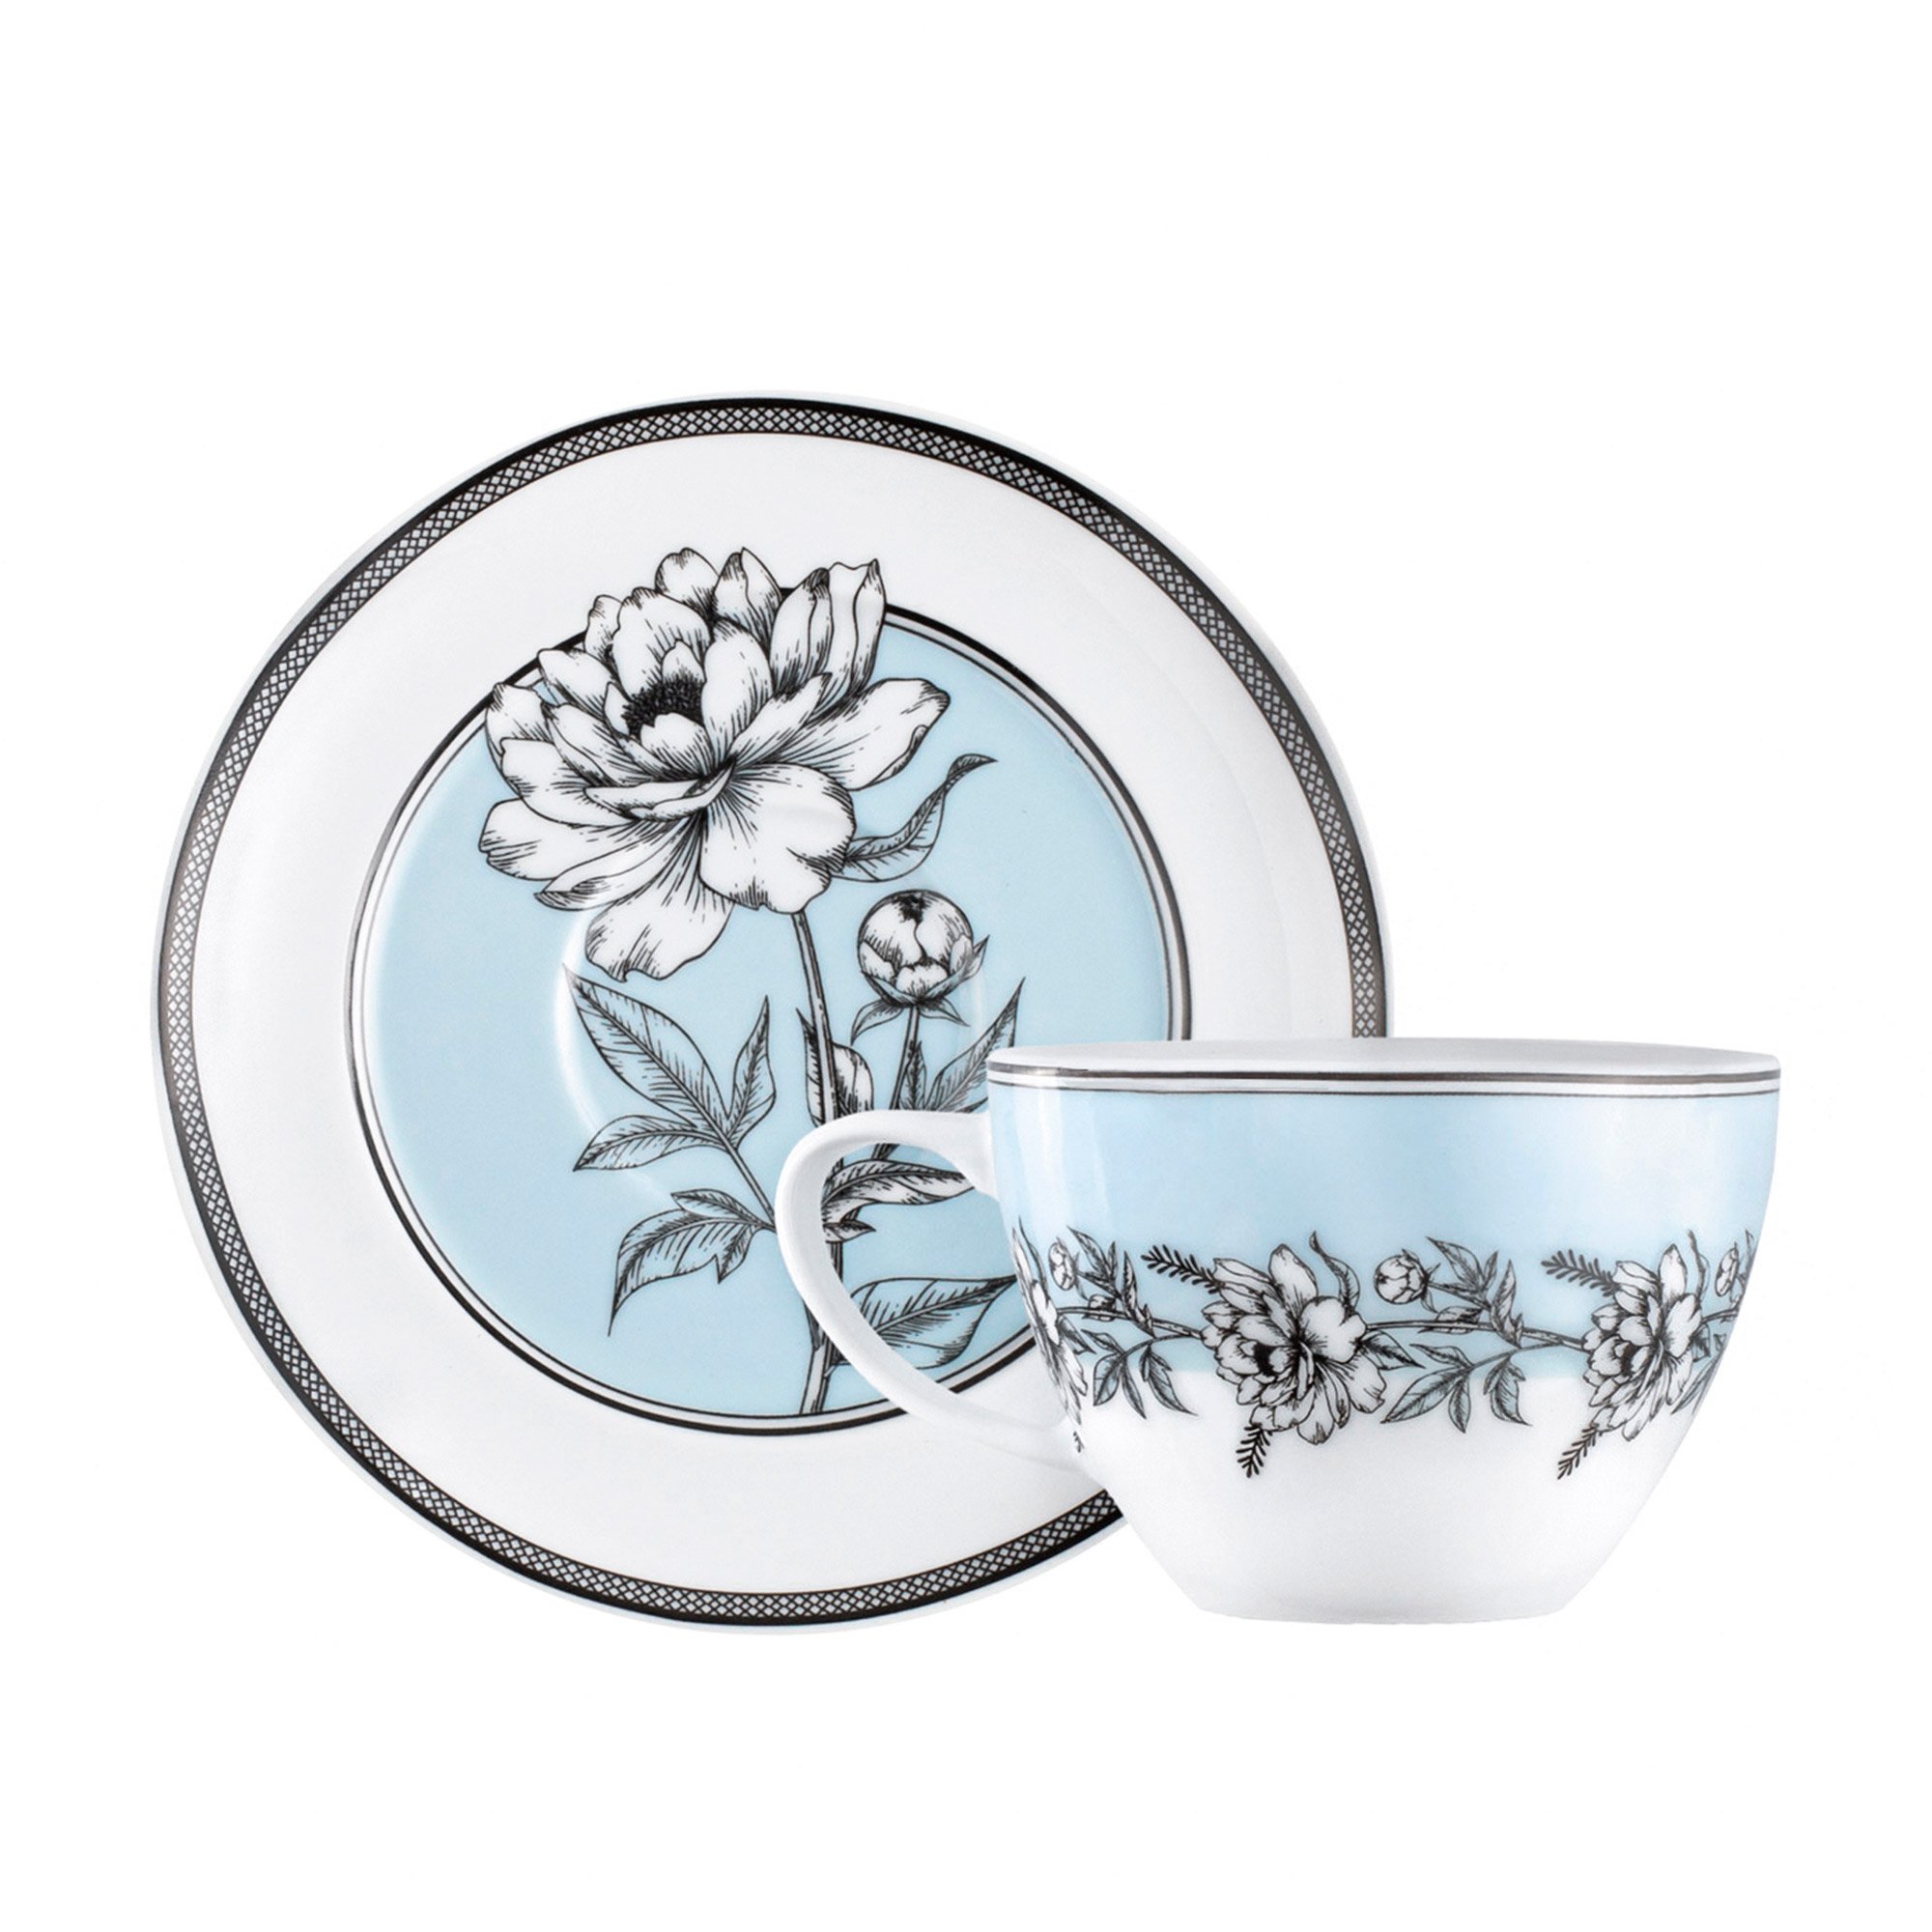 Jogo de chá infantil de porcelana  Toy tea set, Porcelain tea set, Mini  tea set